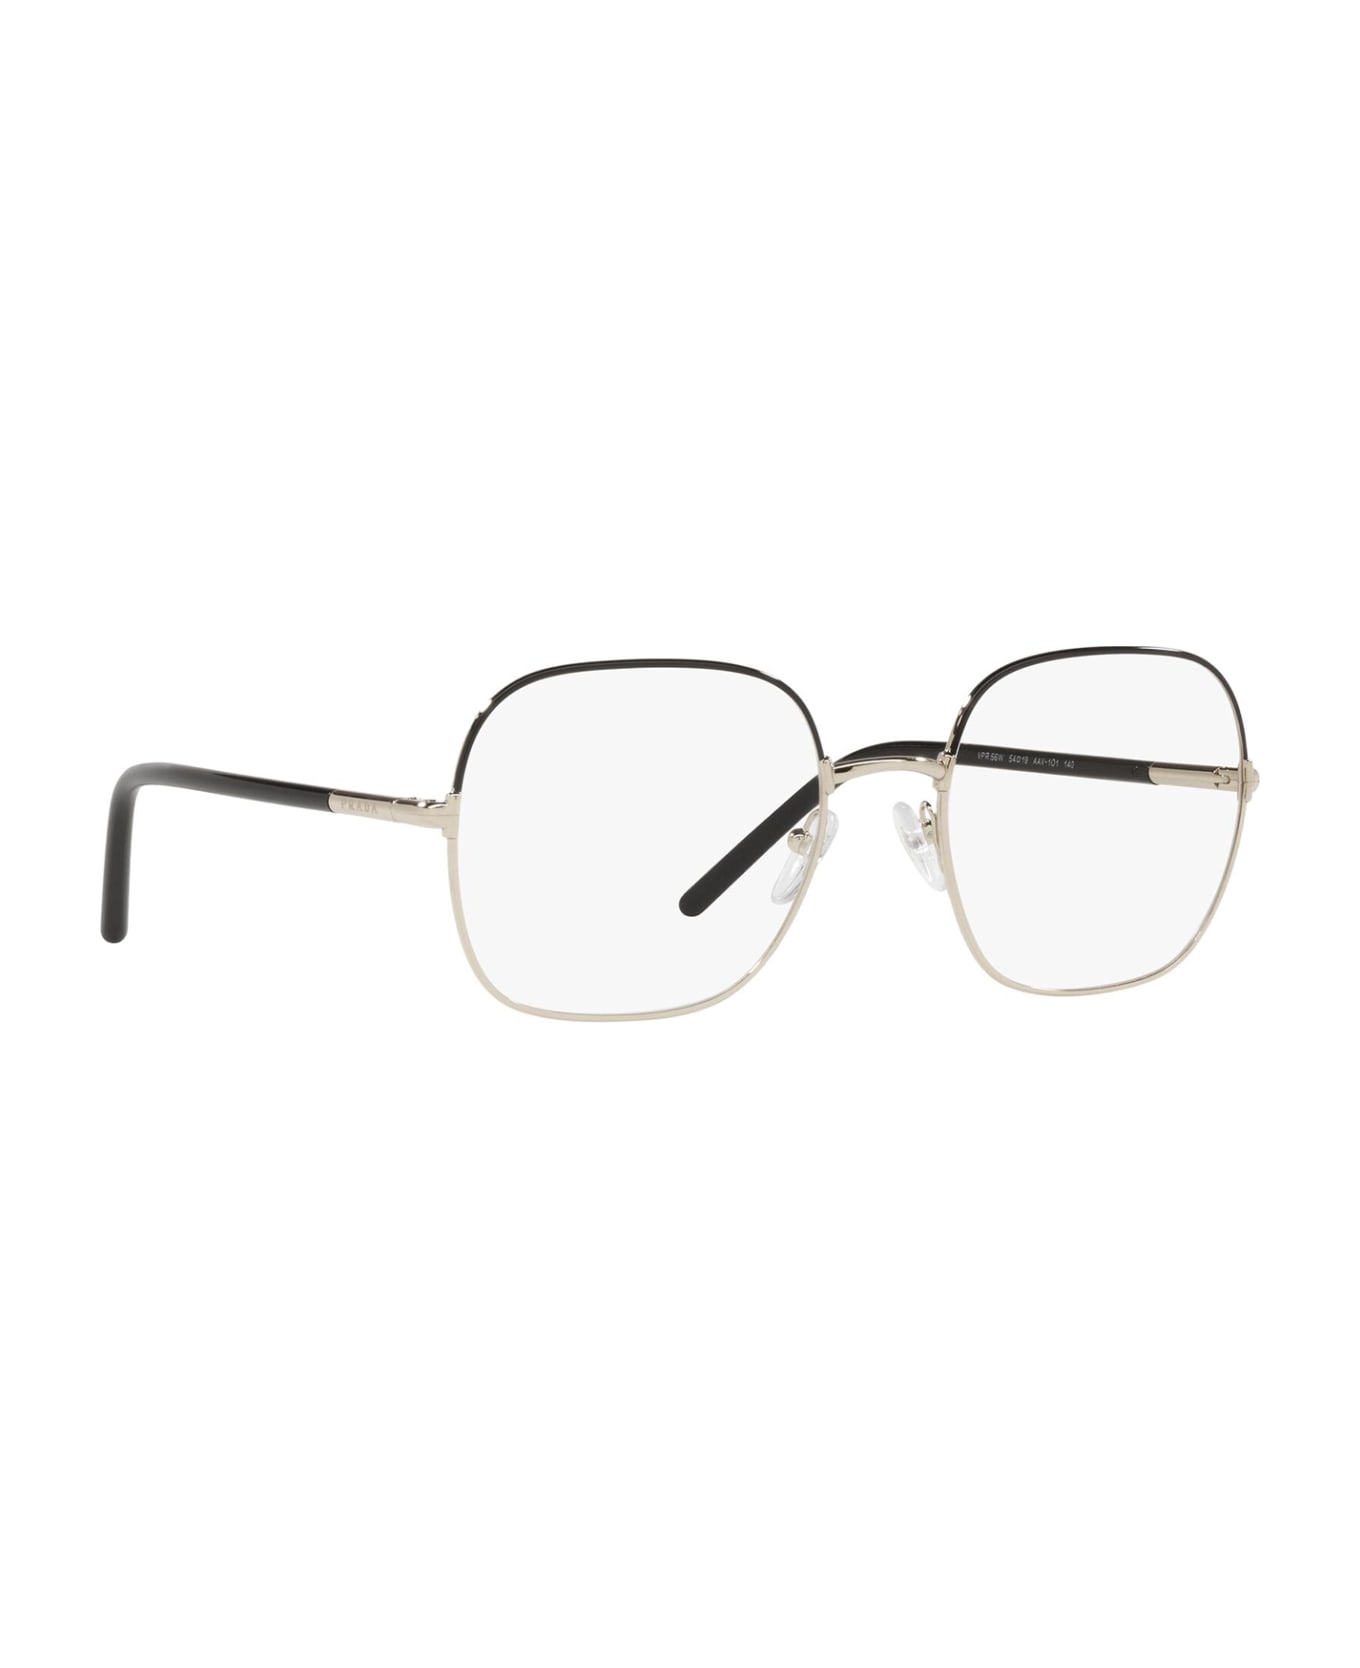 Prada Eyewear Pr 56wv Black / Pale Gold Glasses - Black / Pale Gold